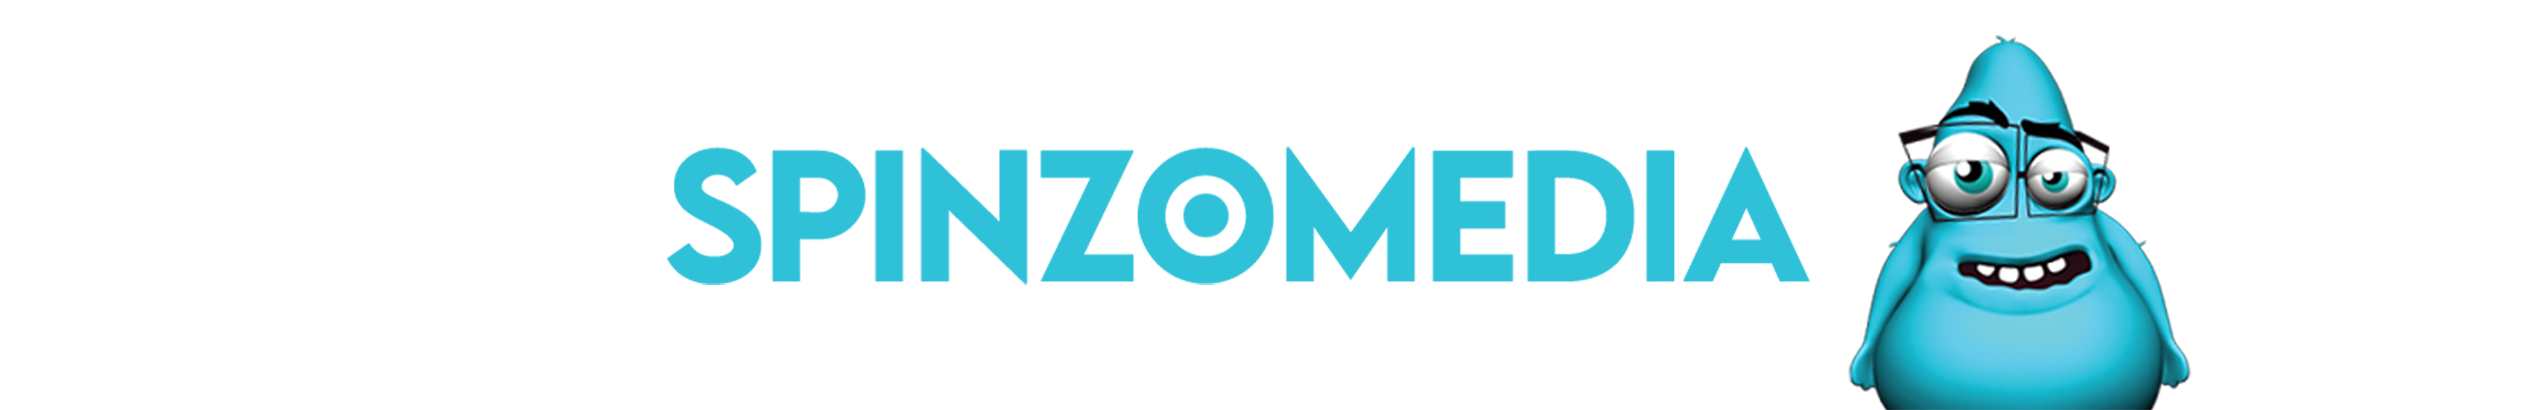 Spinzomedia LLC's profile banner